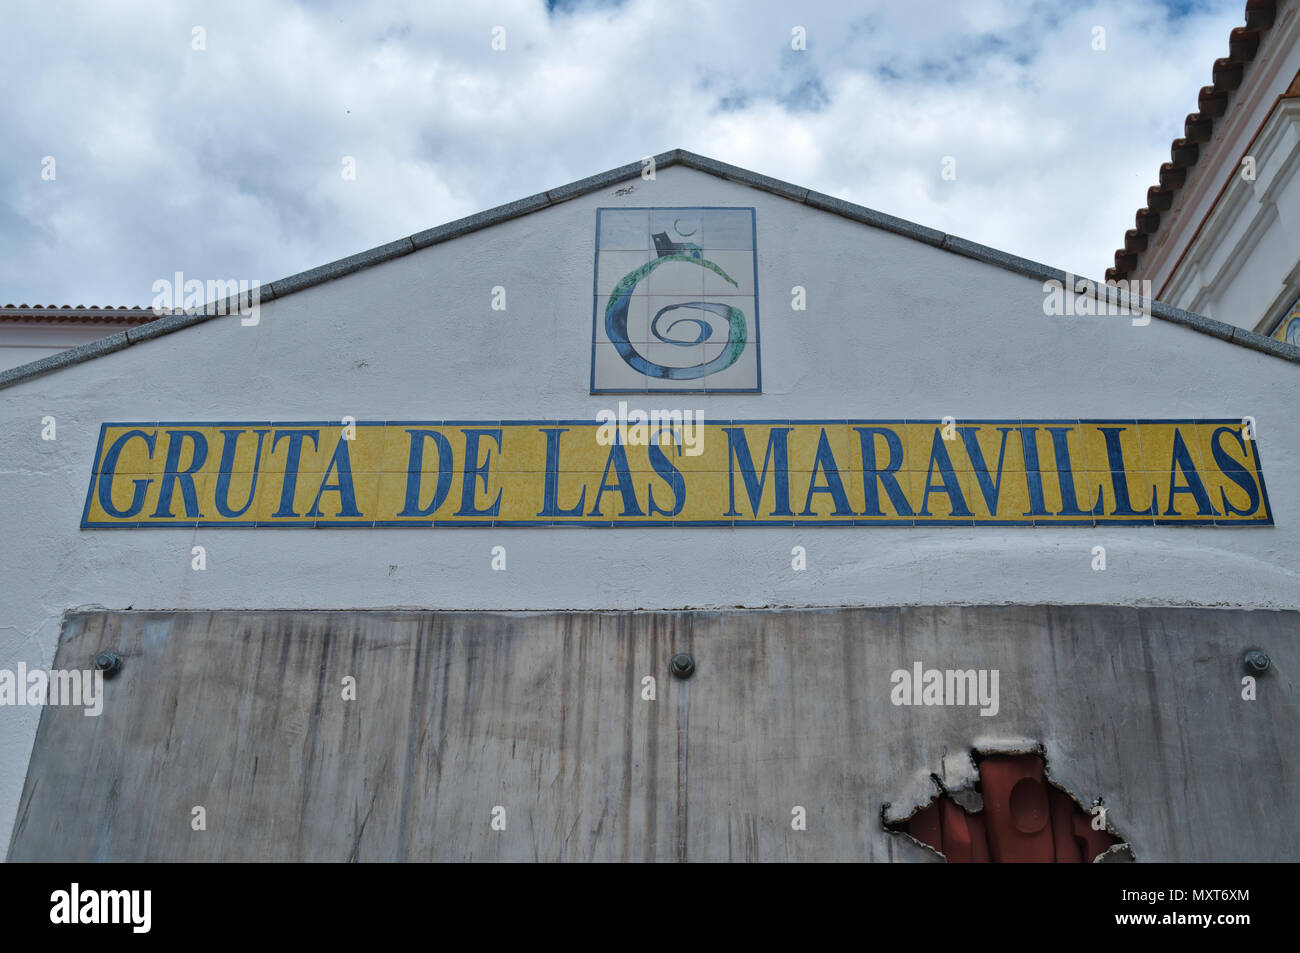 Gruta de las Maravillas outside building in Aracena. Andalusia, Spain Stock Photo